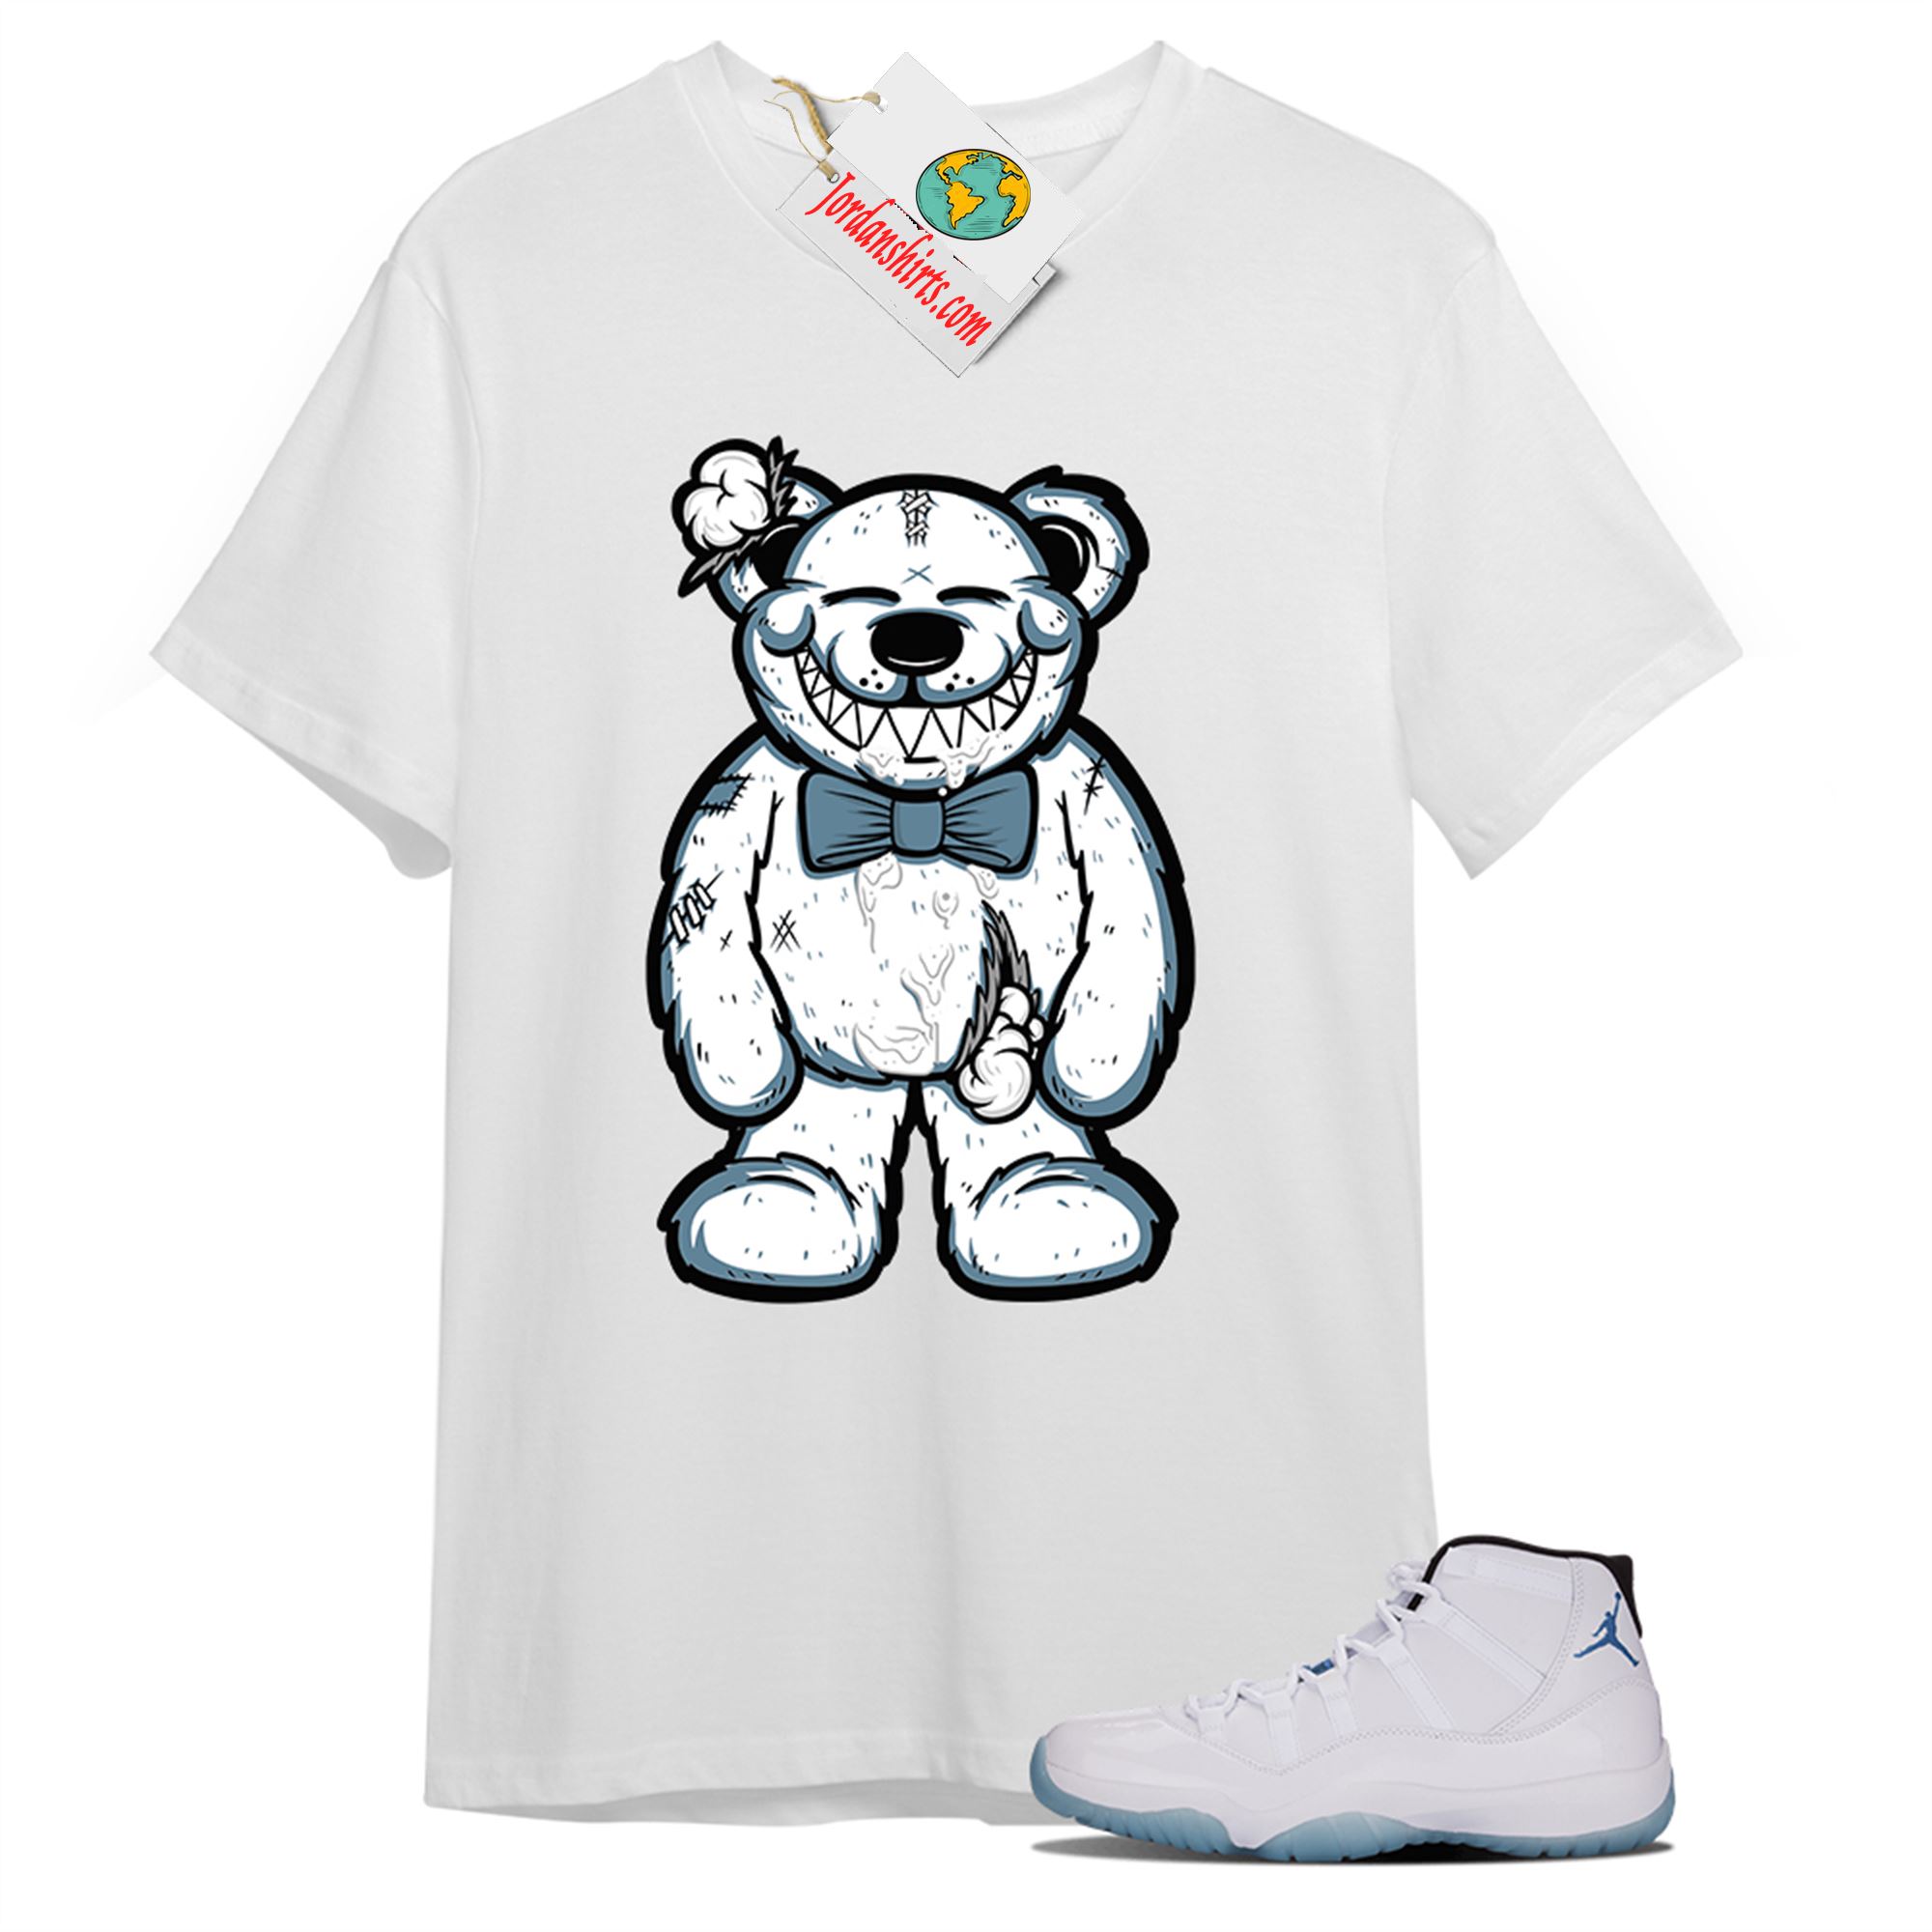 Jordan 11 Shirt, Teddy Bear Smile White T-shirt Air Jordan 11 Legend Blue 11s Plus Size Up To 5xl